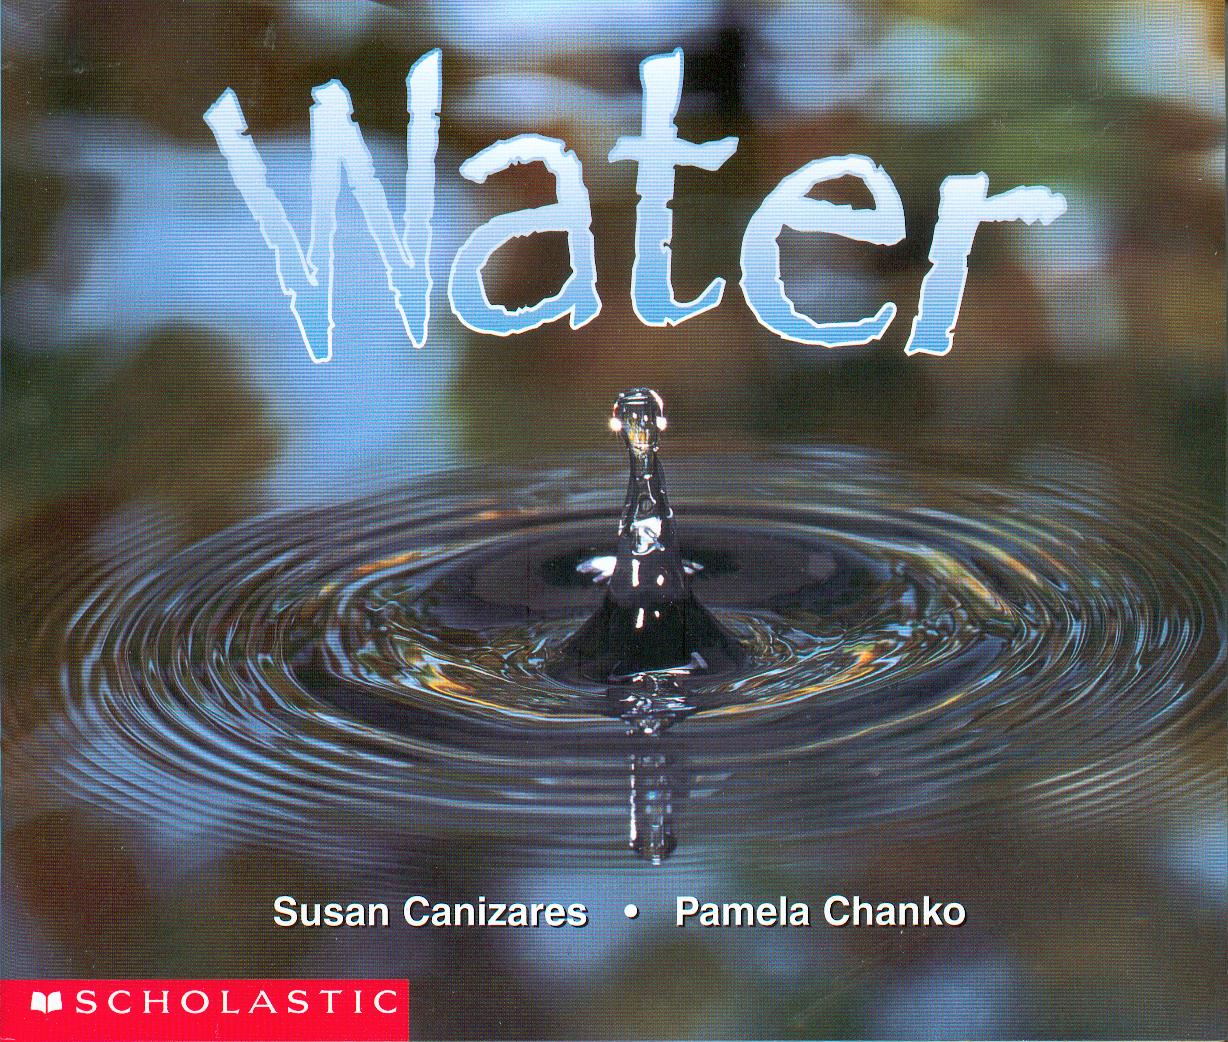 Water / Susan Canizares and Pamela Chanko.